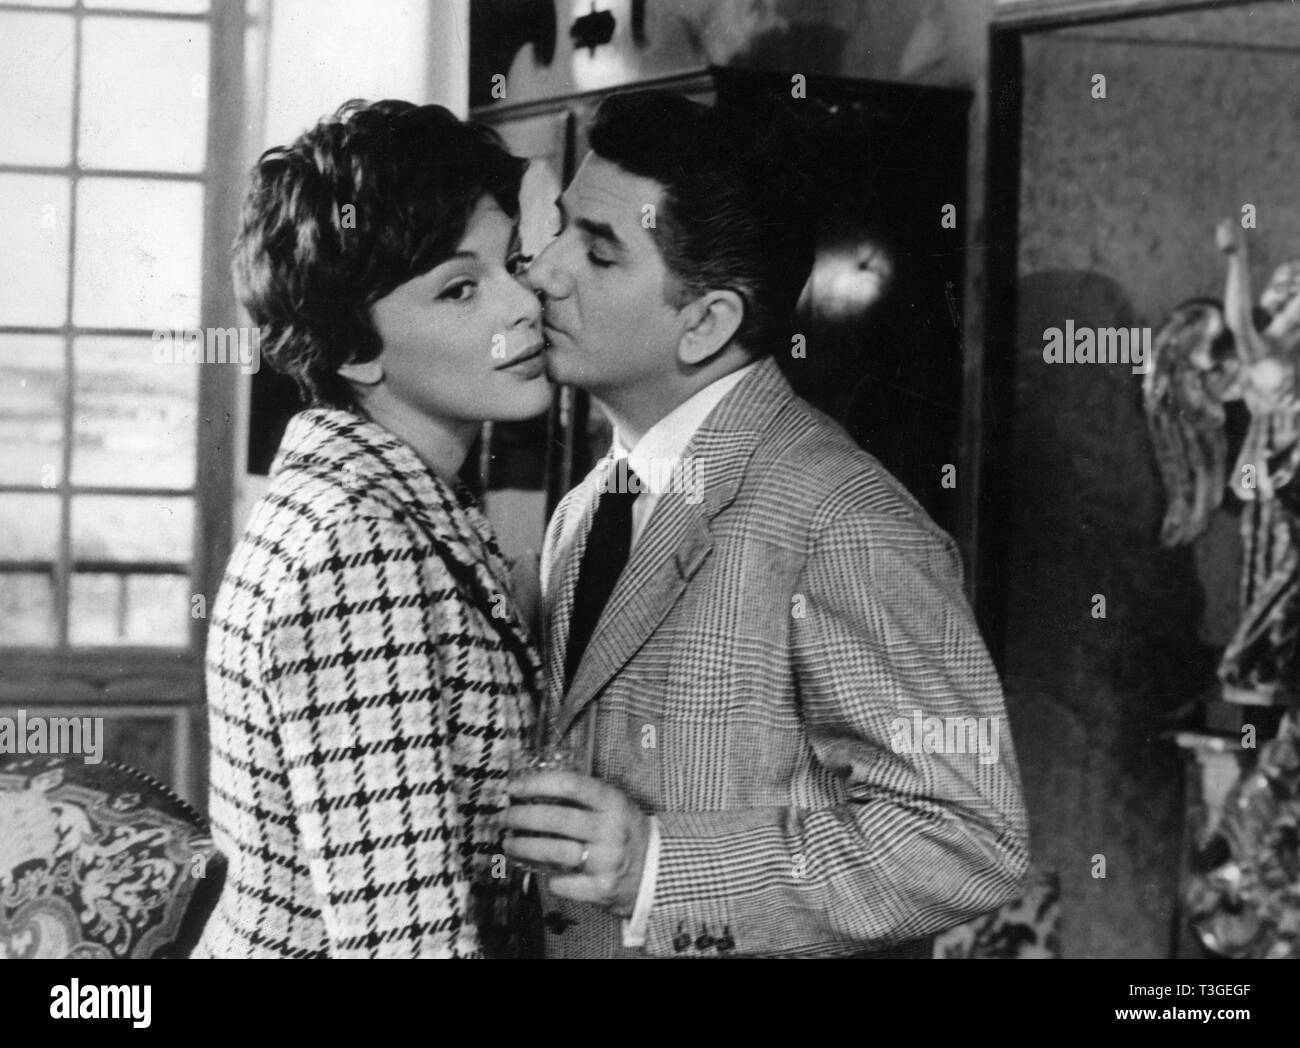 La Morte saison des amours The Season for Love  Year: 1960 - France Daniel Gelin , Francoise Prevost  Director: Pierre Kast Stock Photo